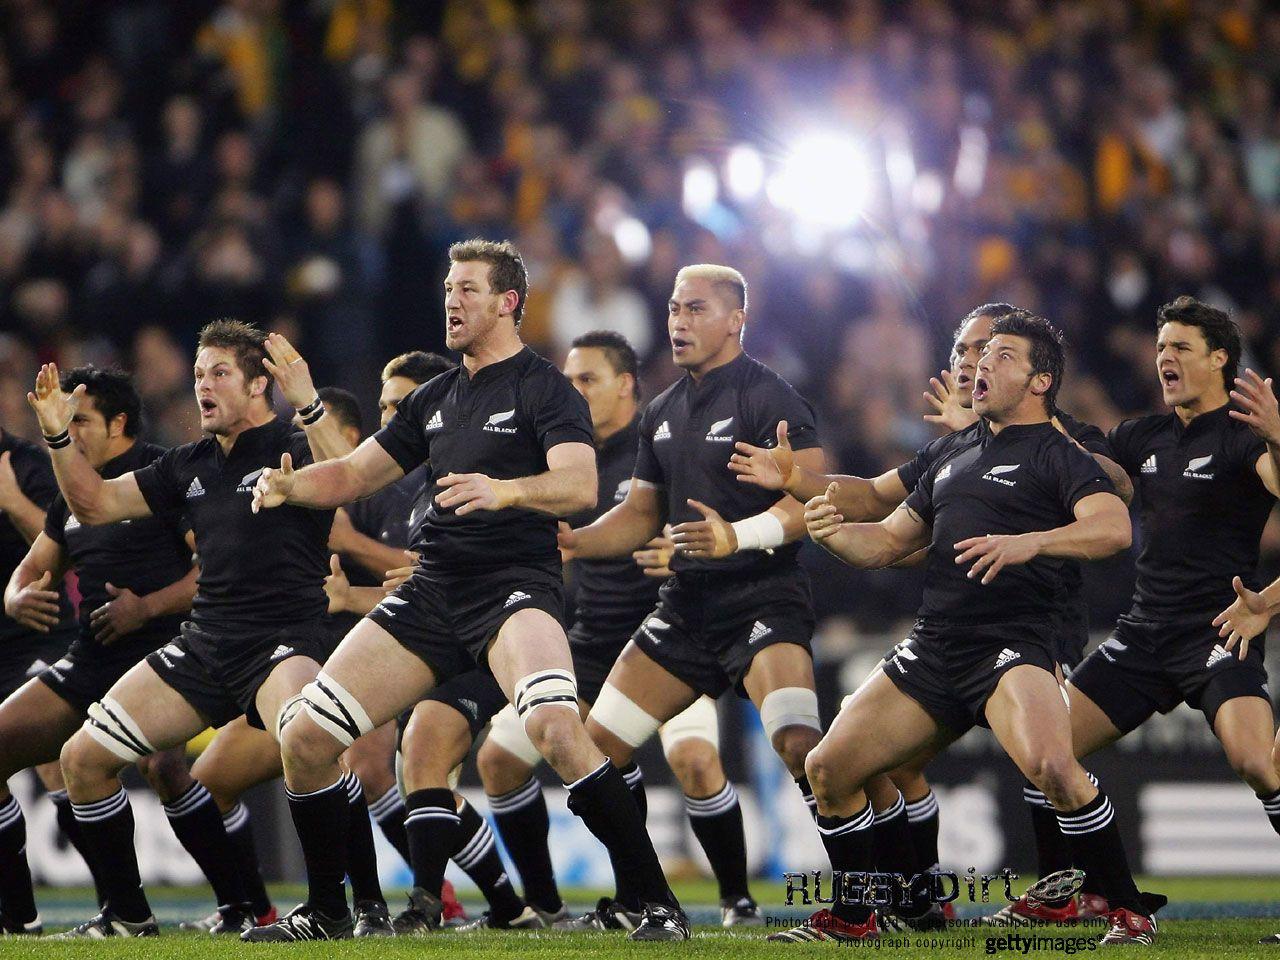 Rugby All Blacks. Sport news on RateSport